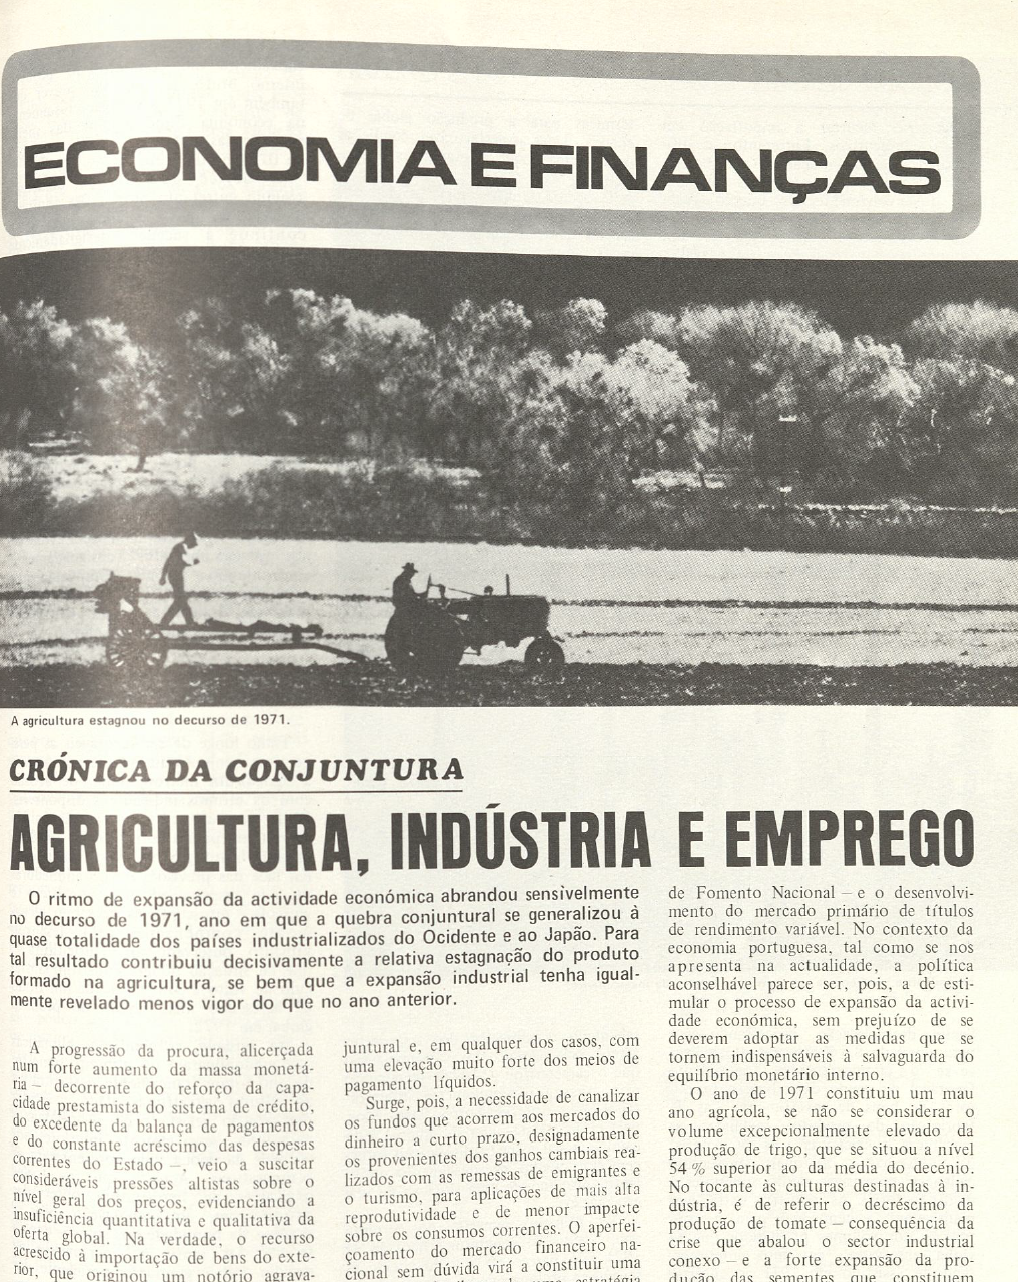 "Agricultura, Indústria, Emprego"